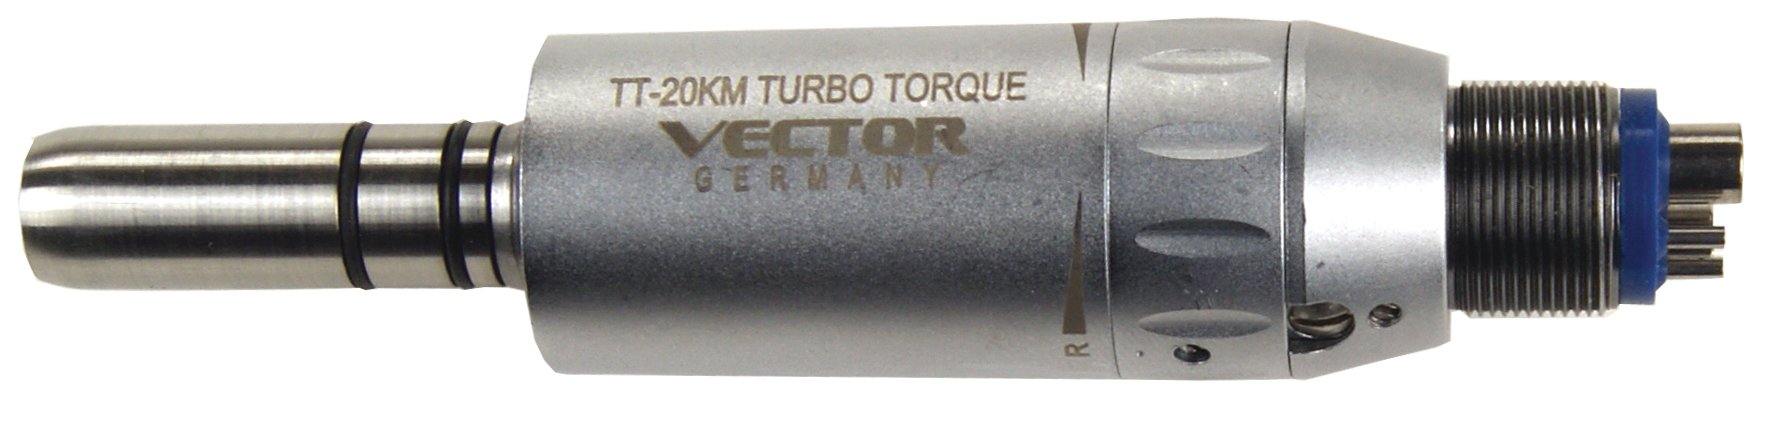 Vector TT-20KM TURBO TORQUE Lowspeed Motor Only (20,000rpm)